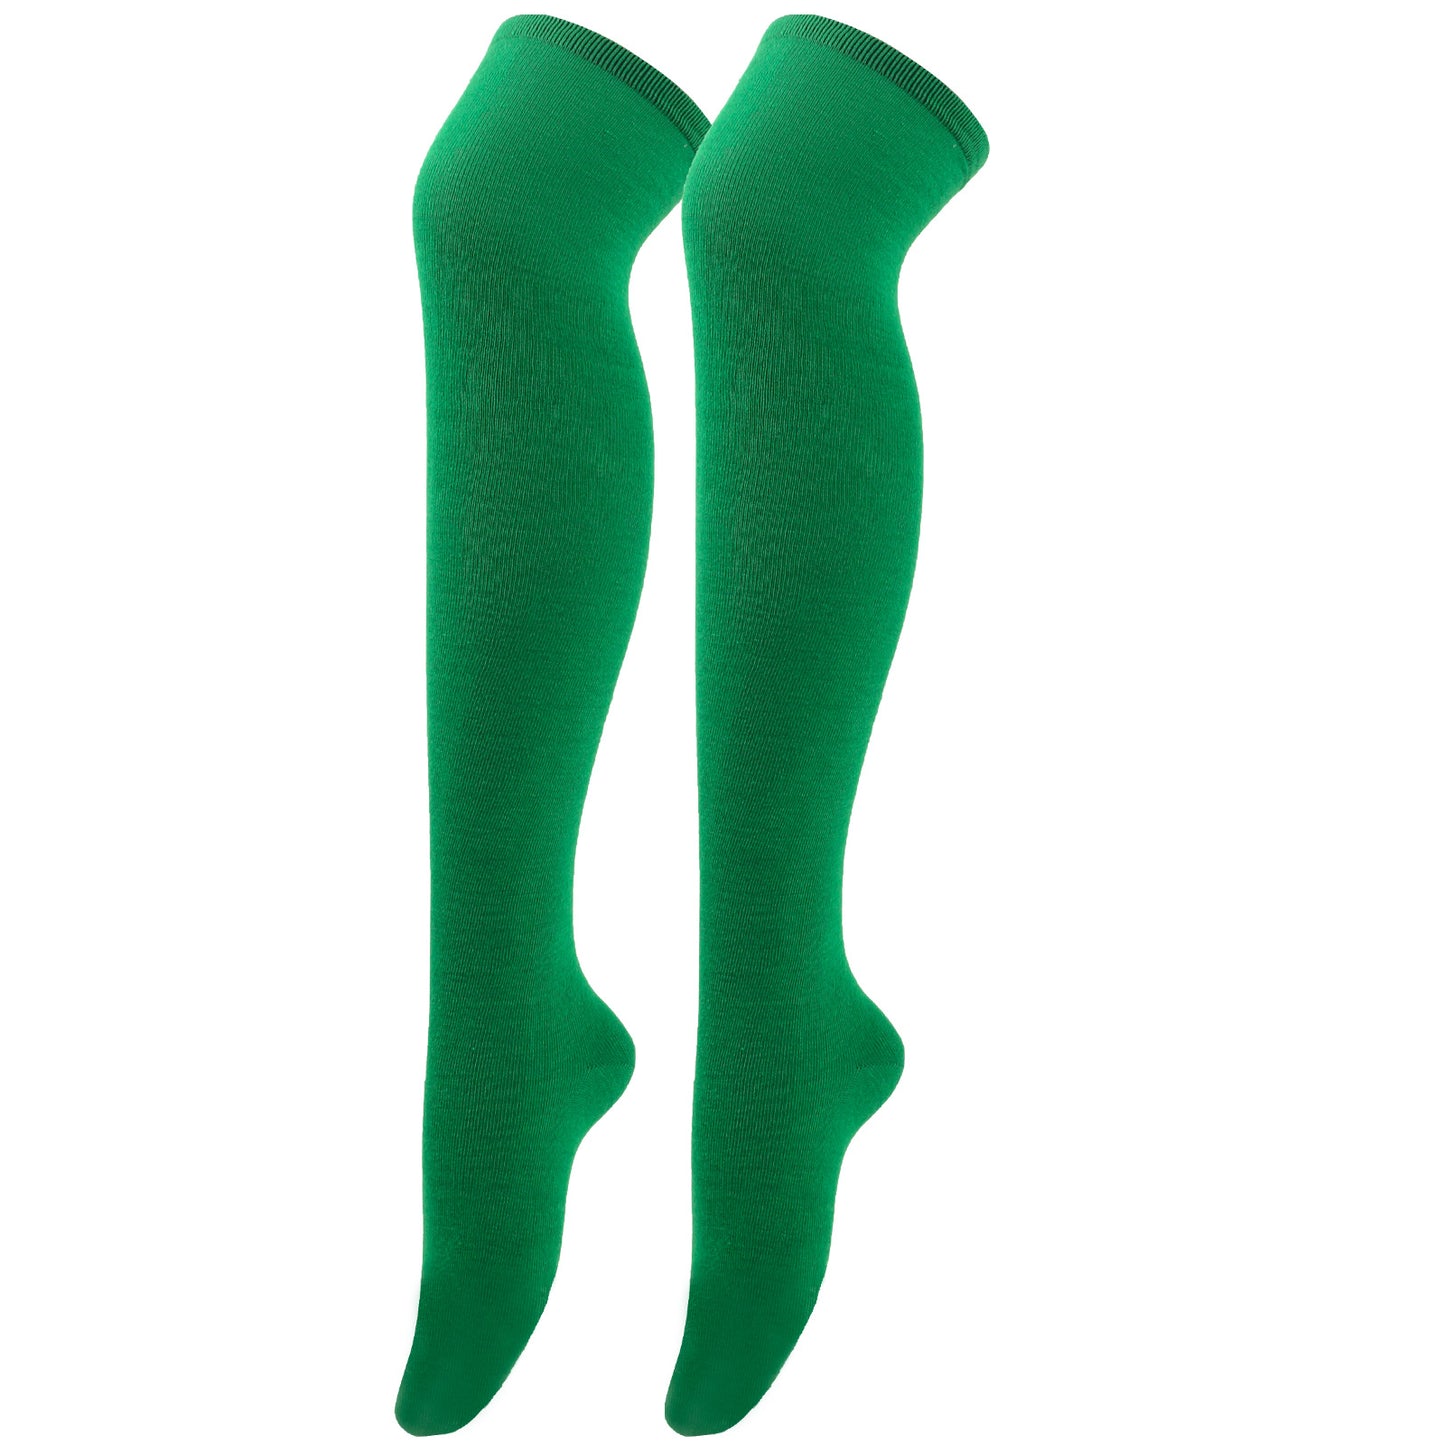 Diagonal Striped Halloween Knee-High Socks: Versatile Colors for All